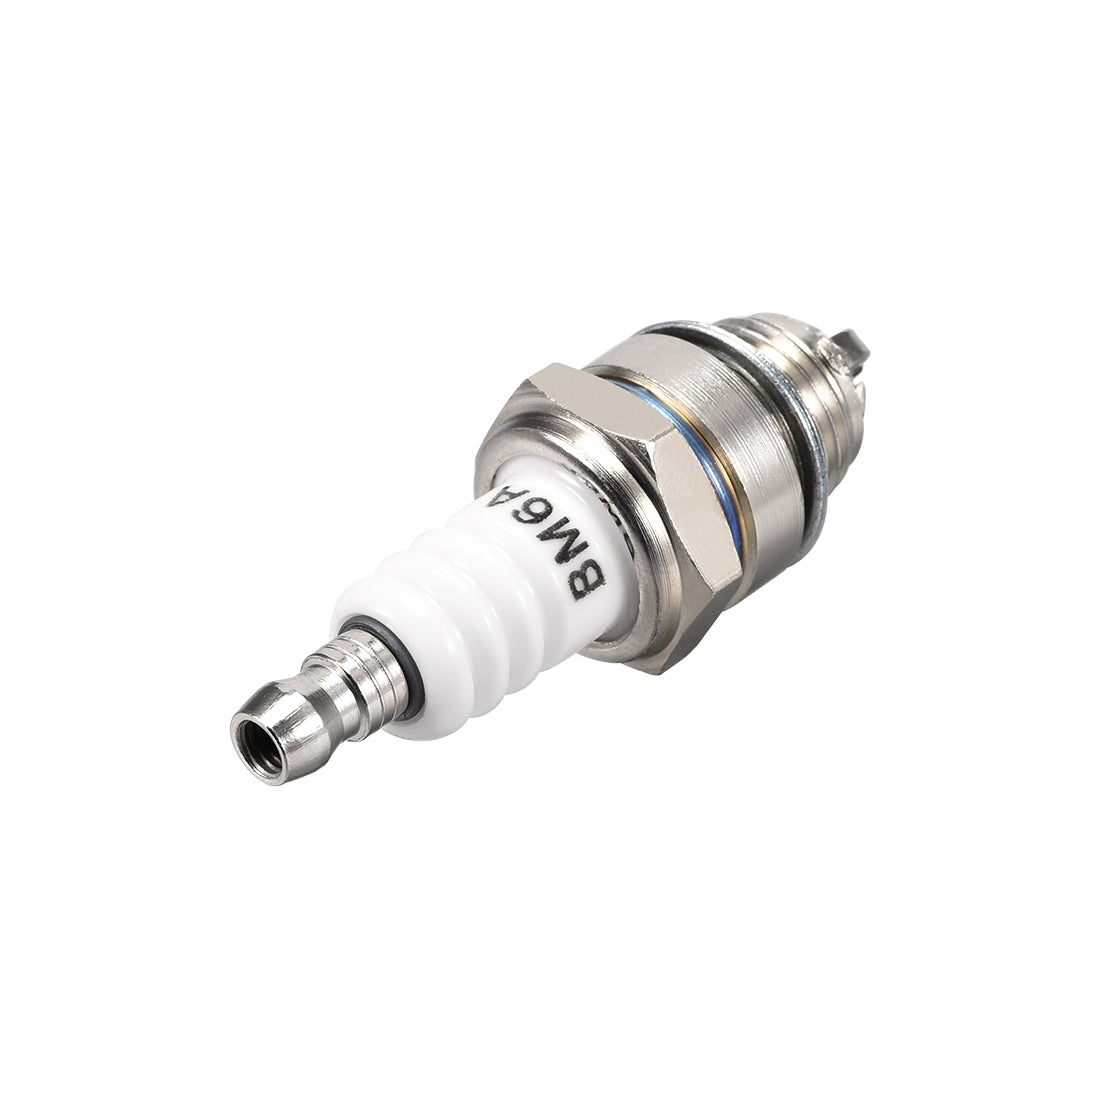 uxcell Uxcell BM6A Spark Plug 3 Electrode , for M7 / L7T / CJ8 / 1560 Spark Plug Replacement , 2pcs